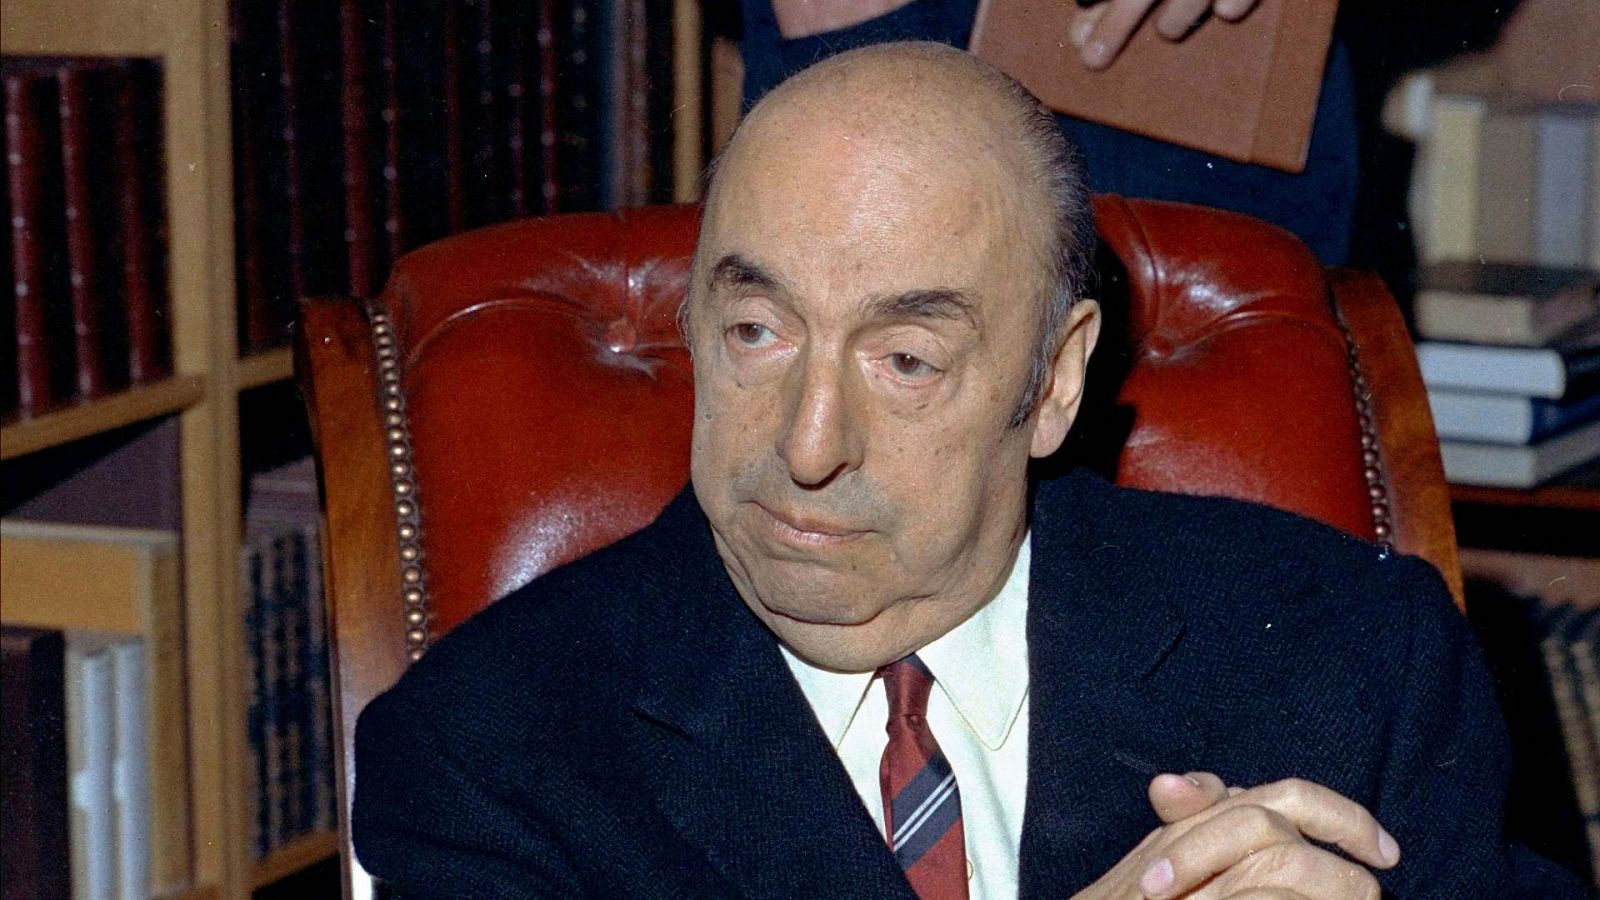 Telediario 1: Neruda murió envenenado, según su familia | RTVE Play